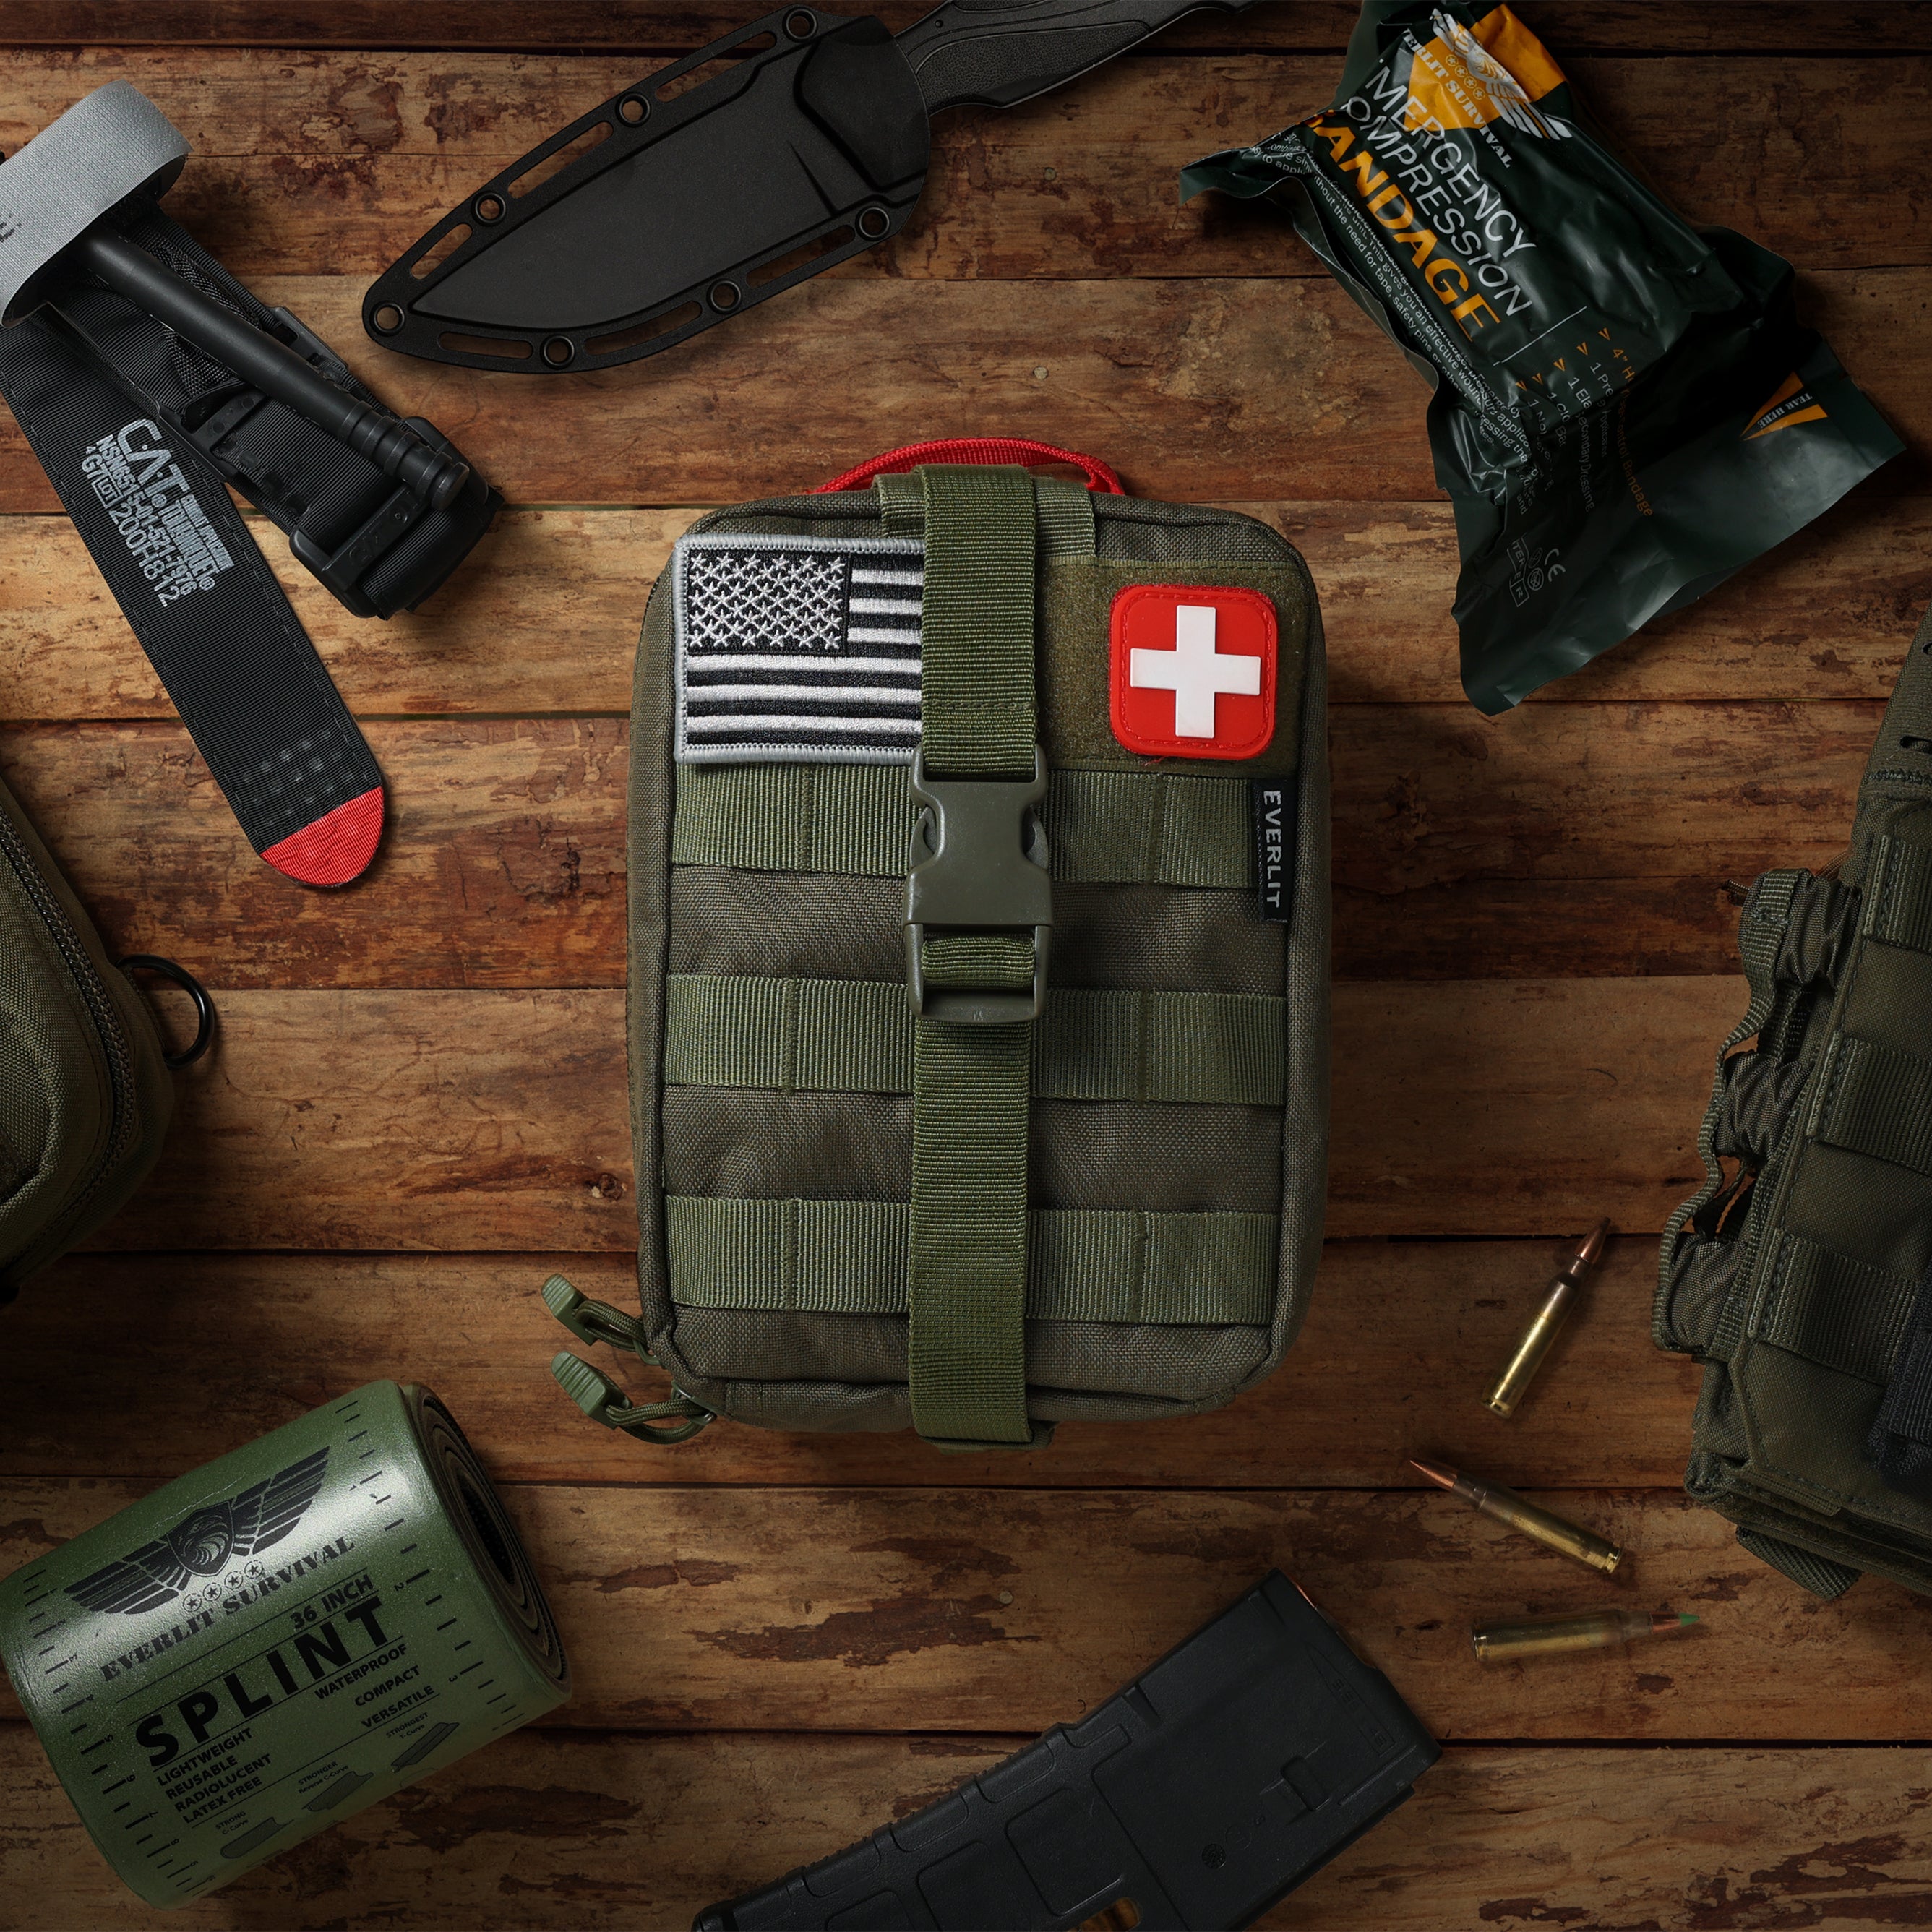  Everlit Kit de emergencia de trauma con torniquete de aluminio  de 36 pulgadas, férula táctica de combate militar IFAK para respuesta de  primeros auxilios, heridas críticas, disparos de pistola, estallidos,  control